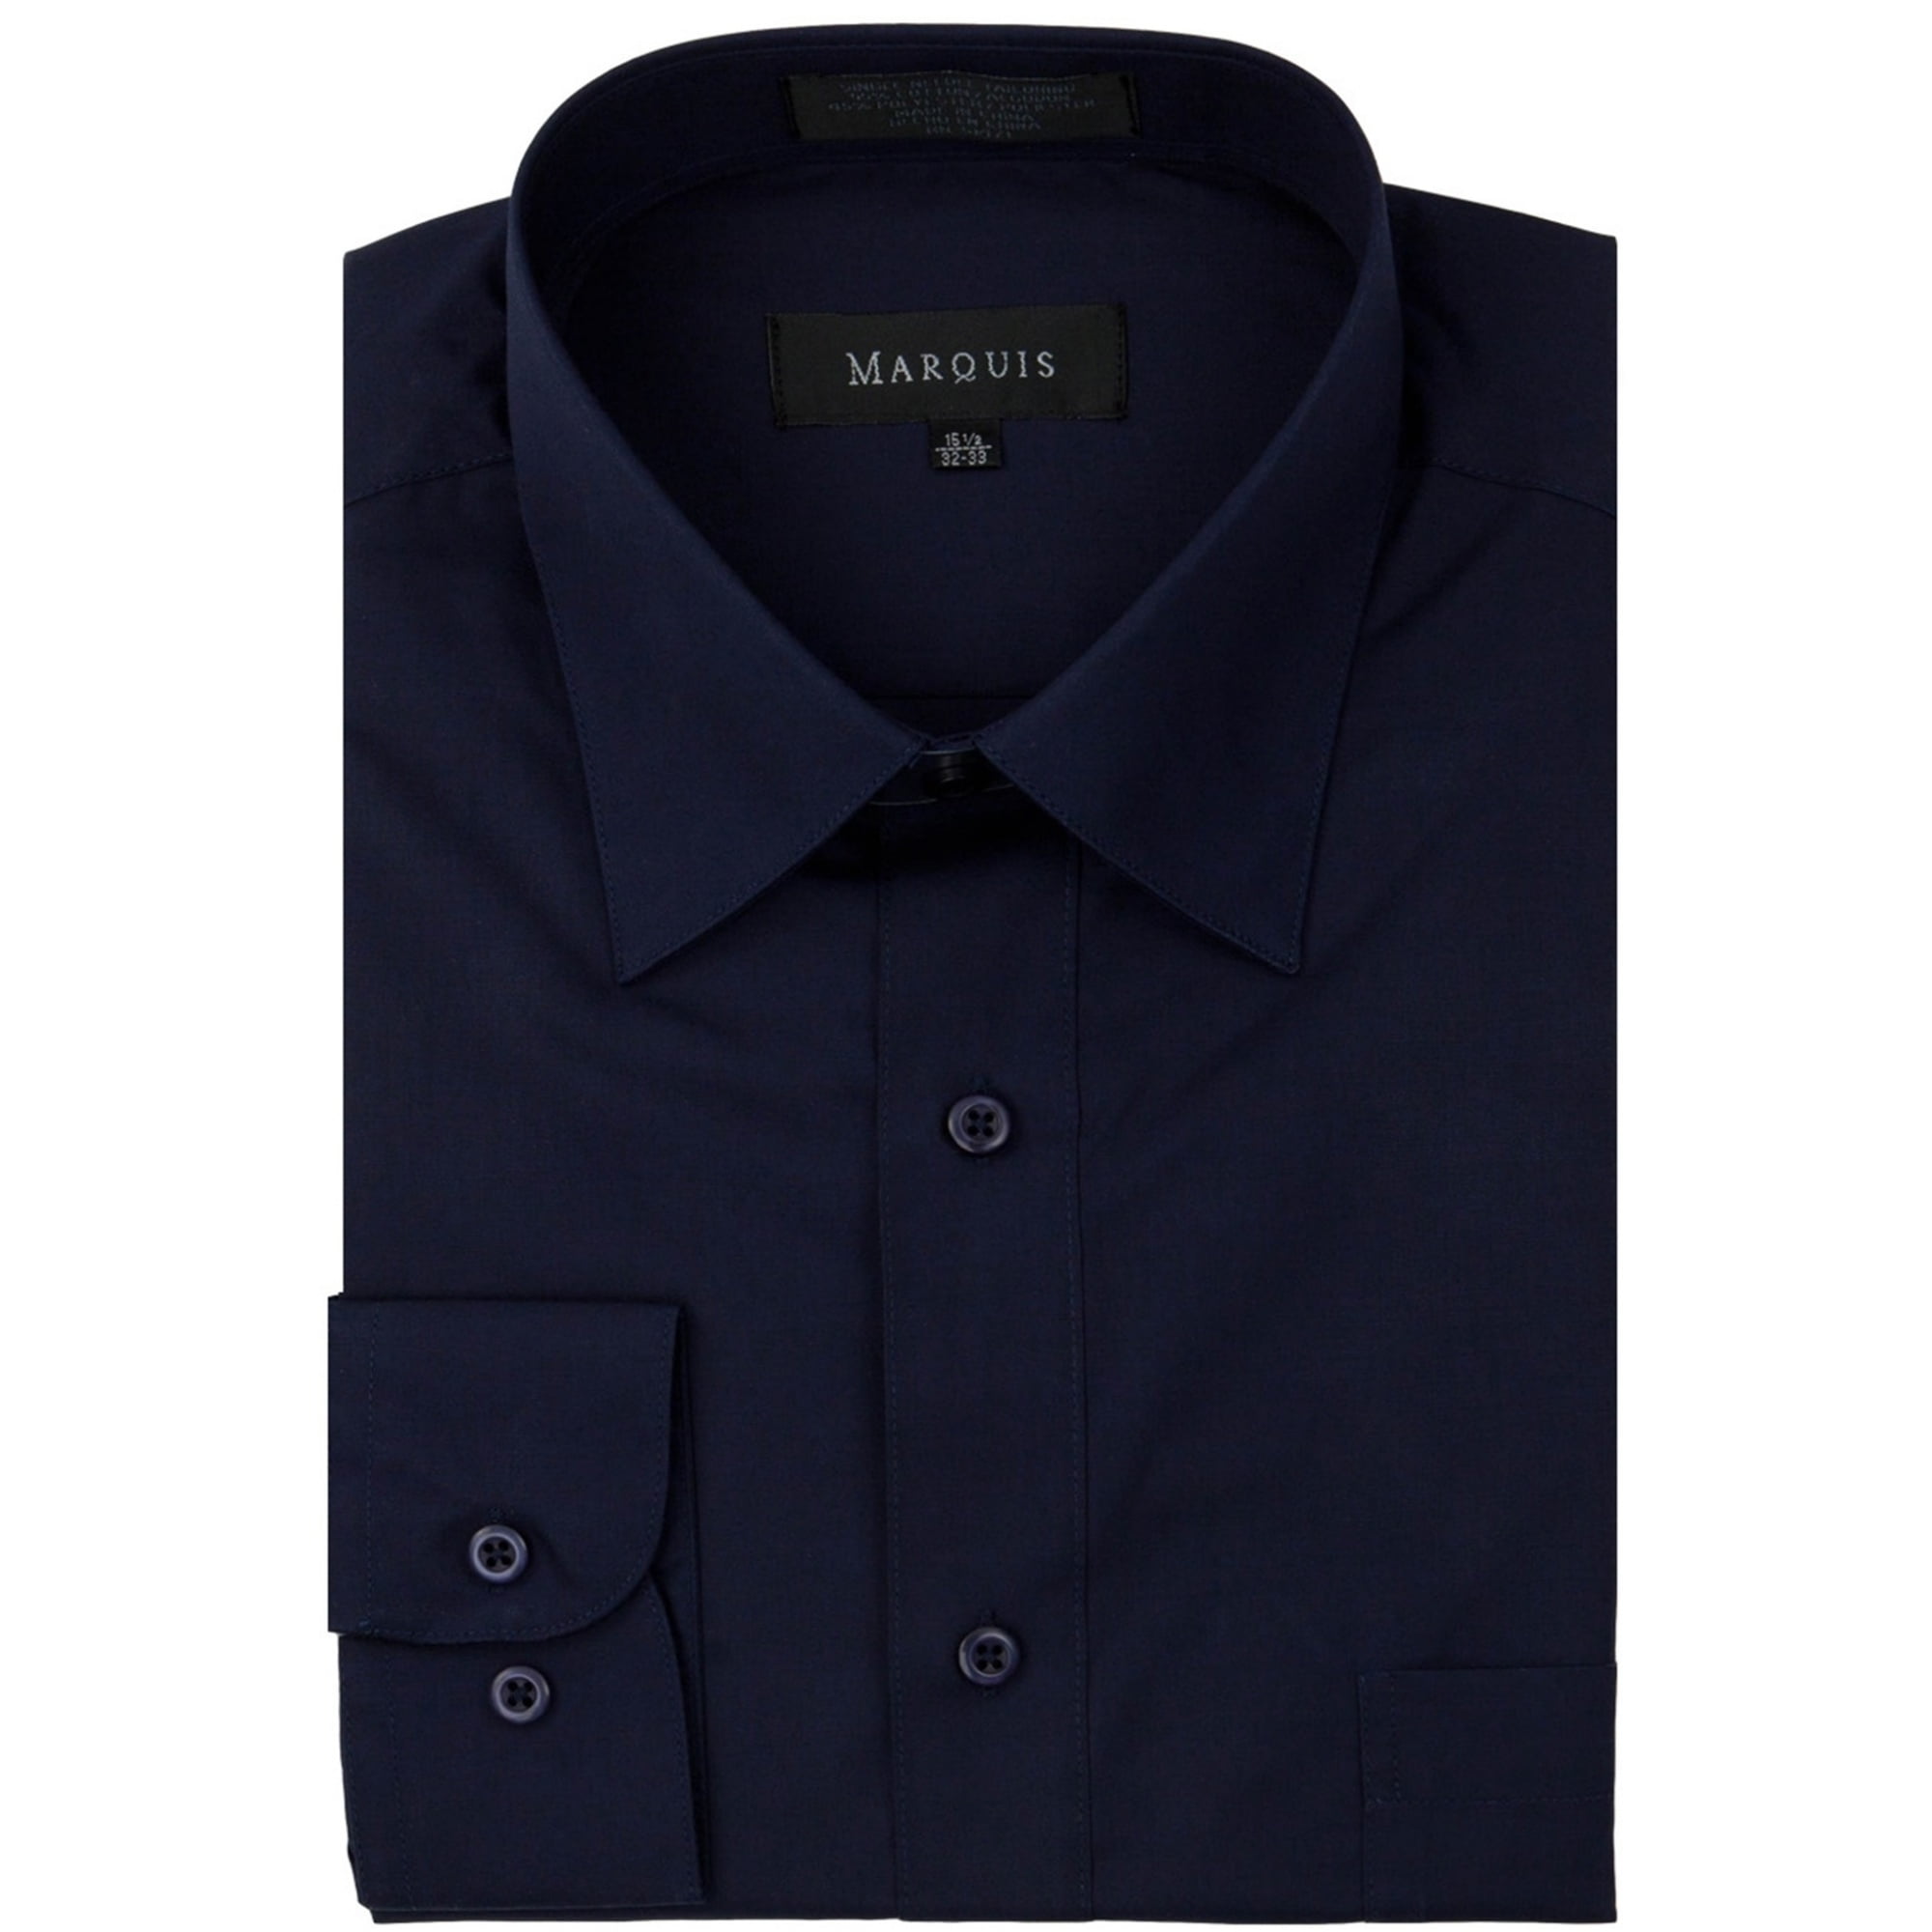 Navy Blue Classic Fit Long Sleeve Dress Shirt N 17.5, S 32-33